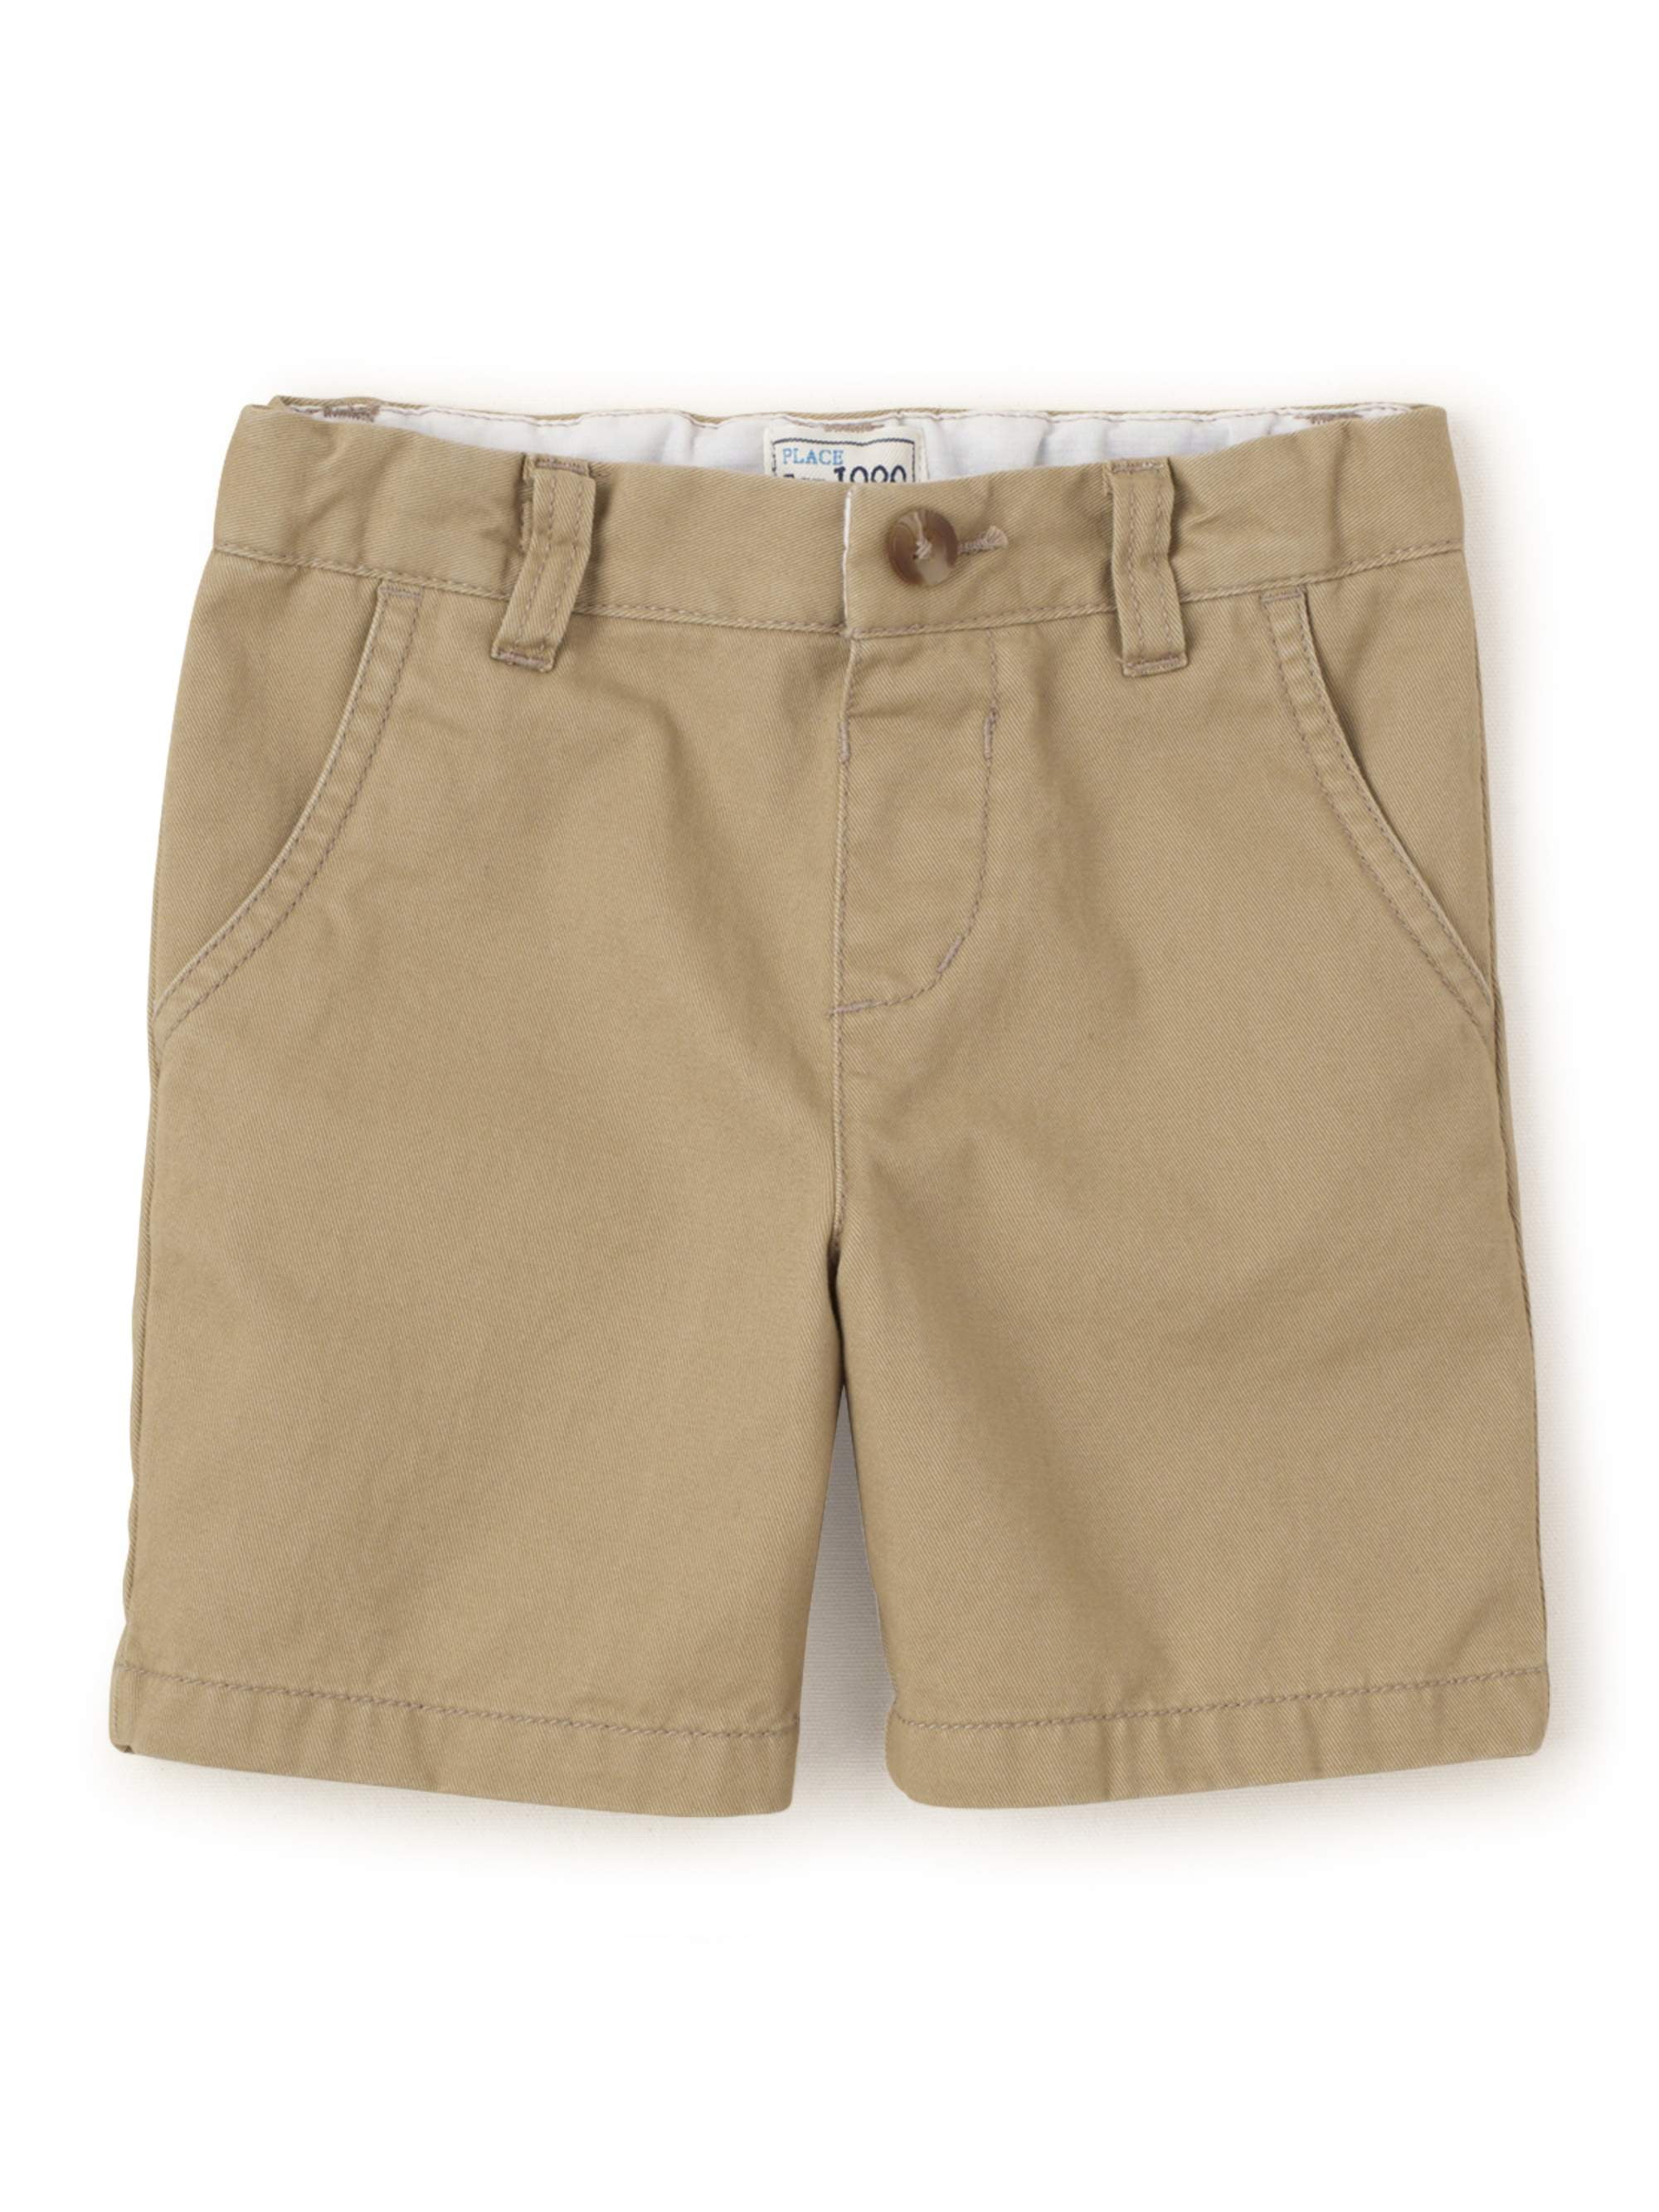 Carters Little Boys Flat-Front Shorts Navy 2T